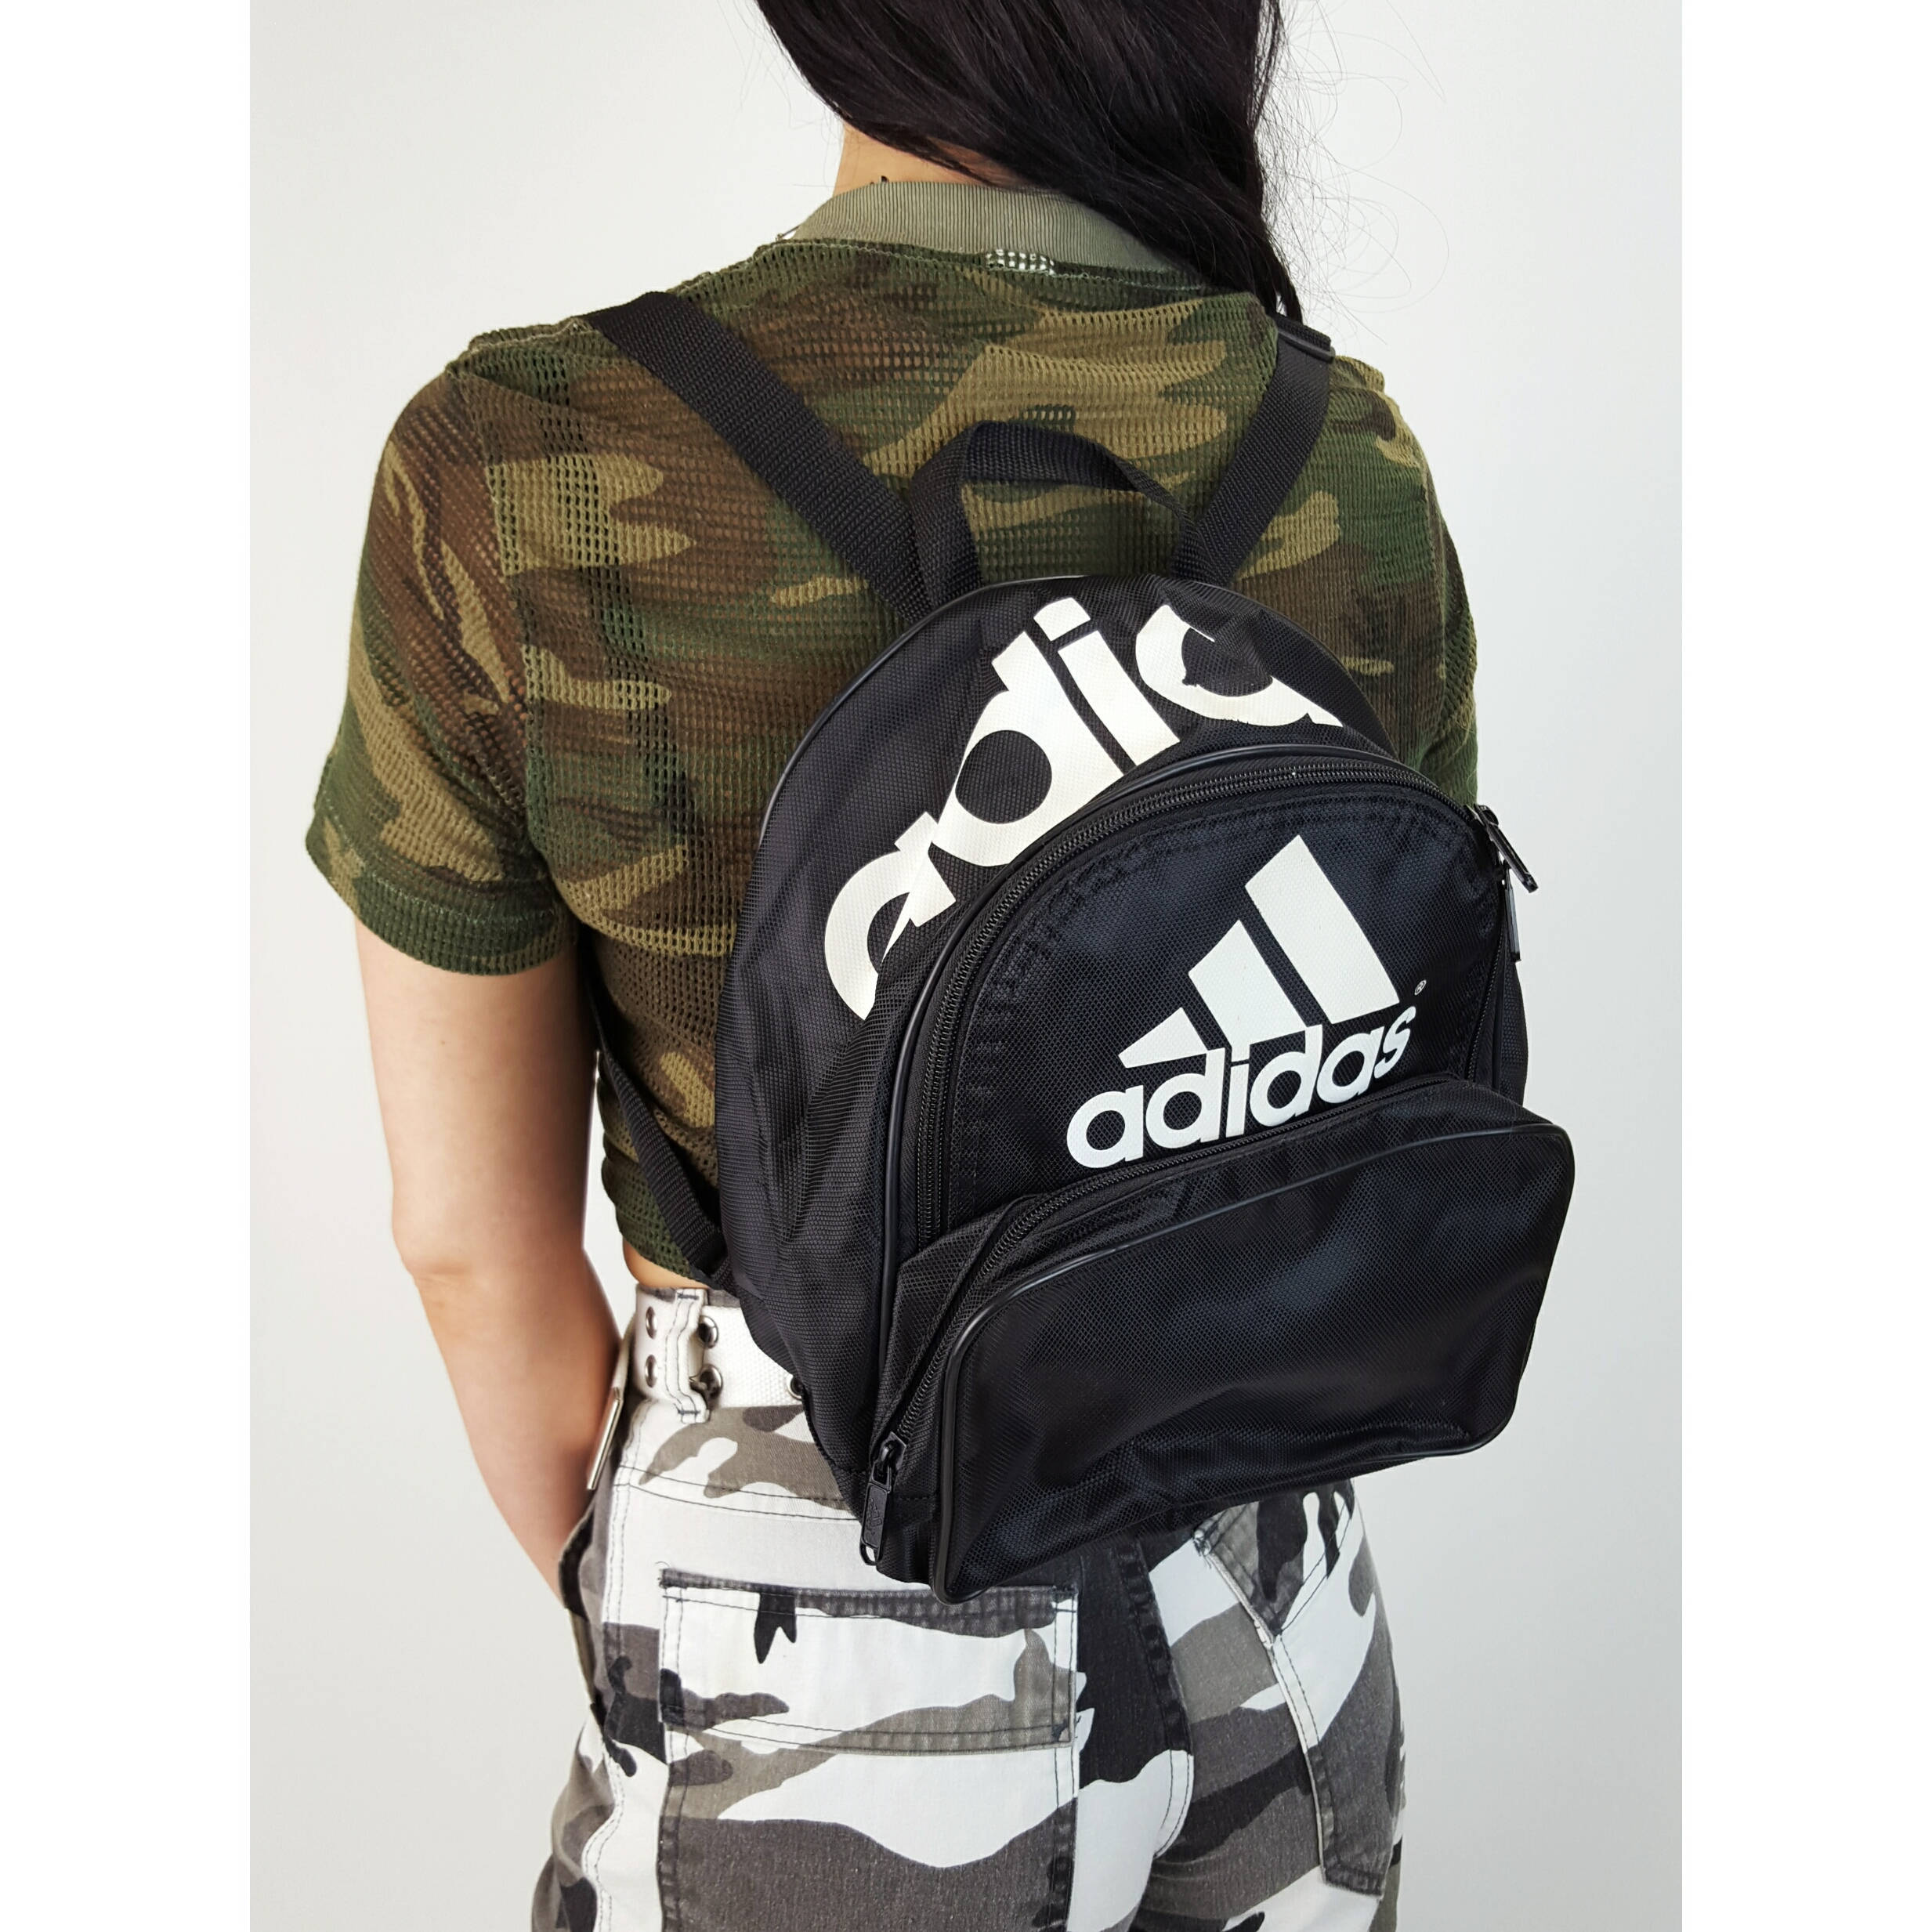 Adidas Black Mini Backpack - Small Health Goth Bookbag Satchel - Black and White Logo Branded ...